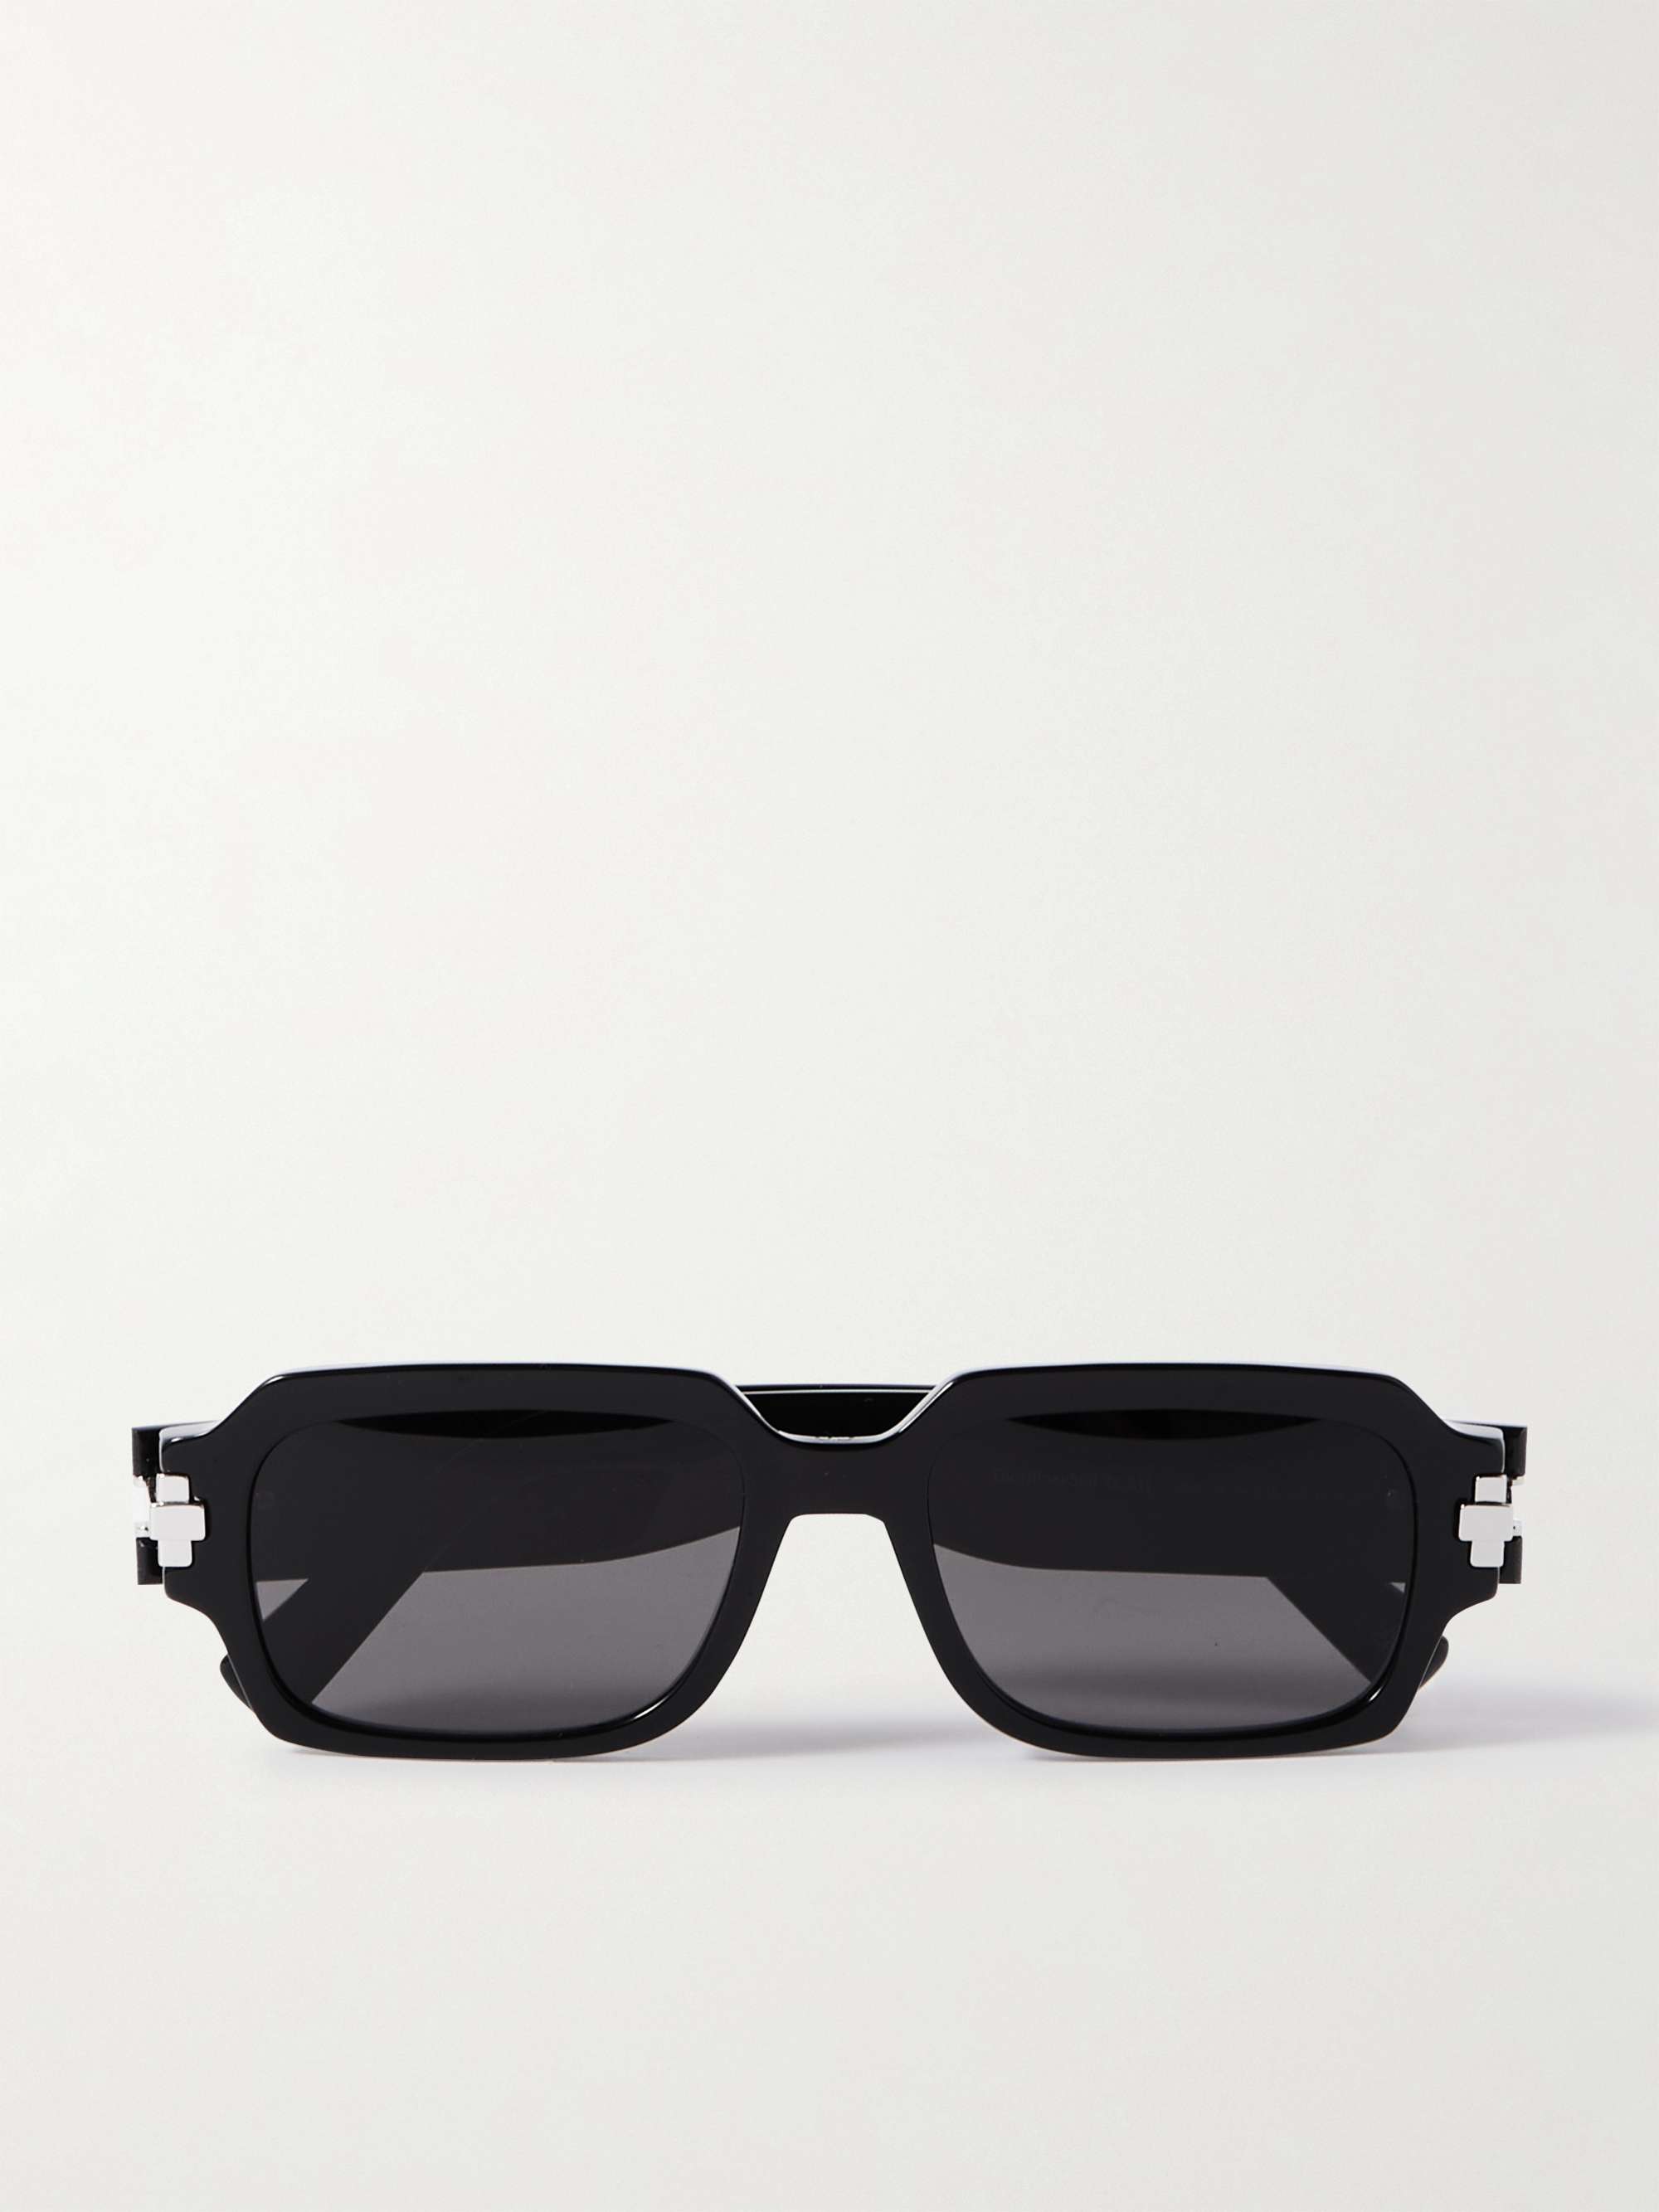 Aggregate 128+ dior sunglasses latest